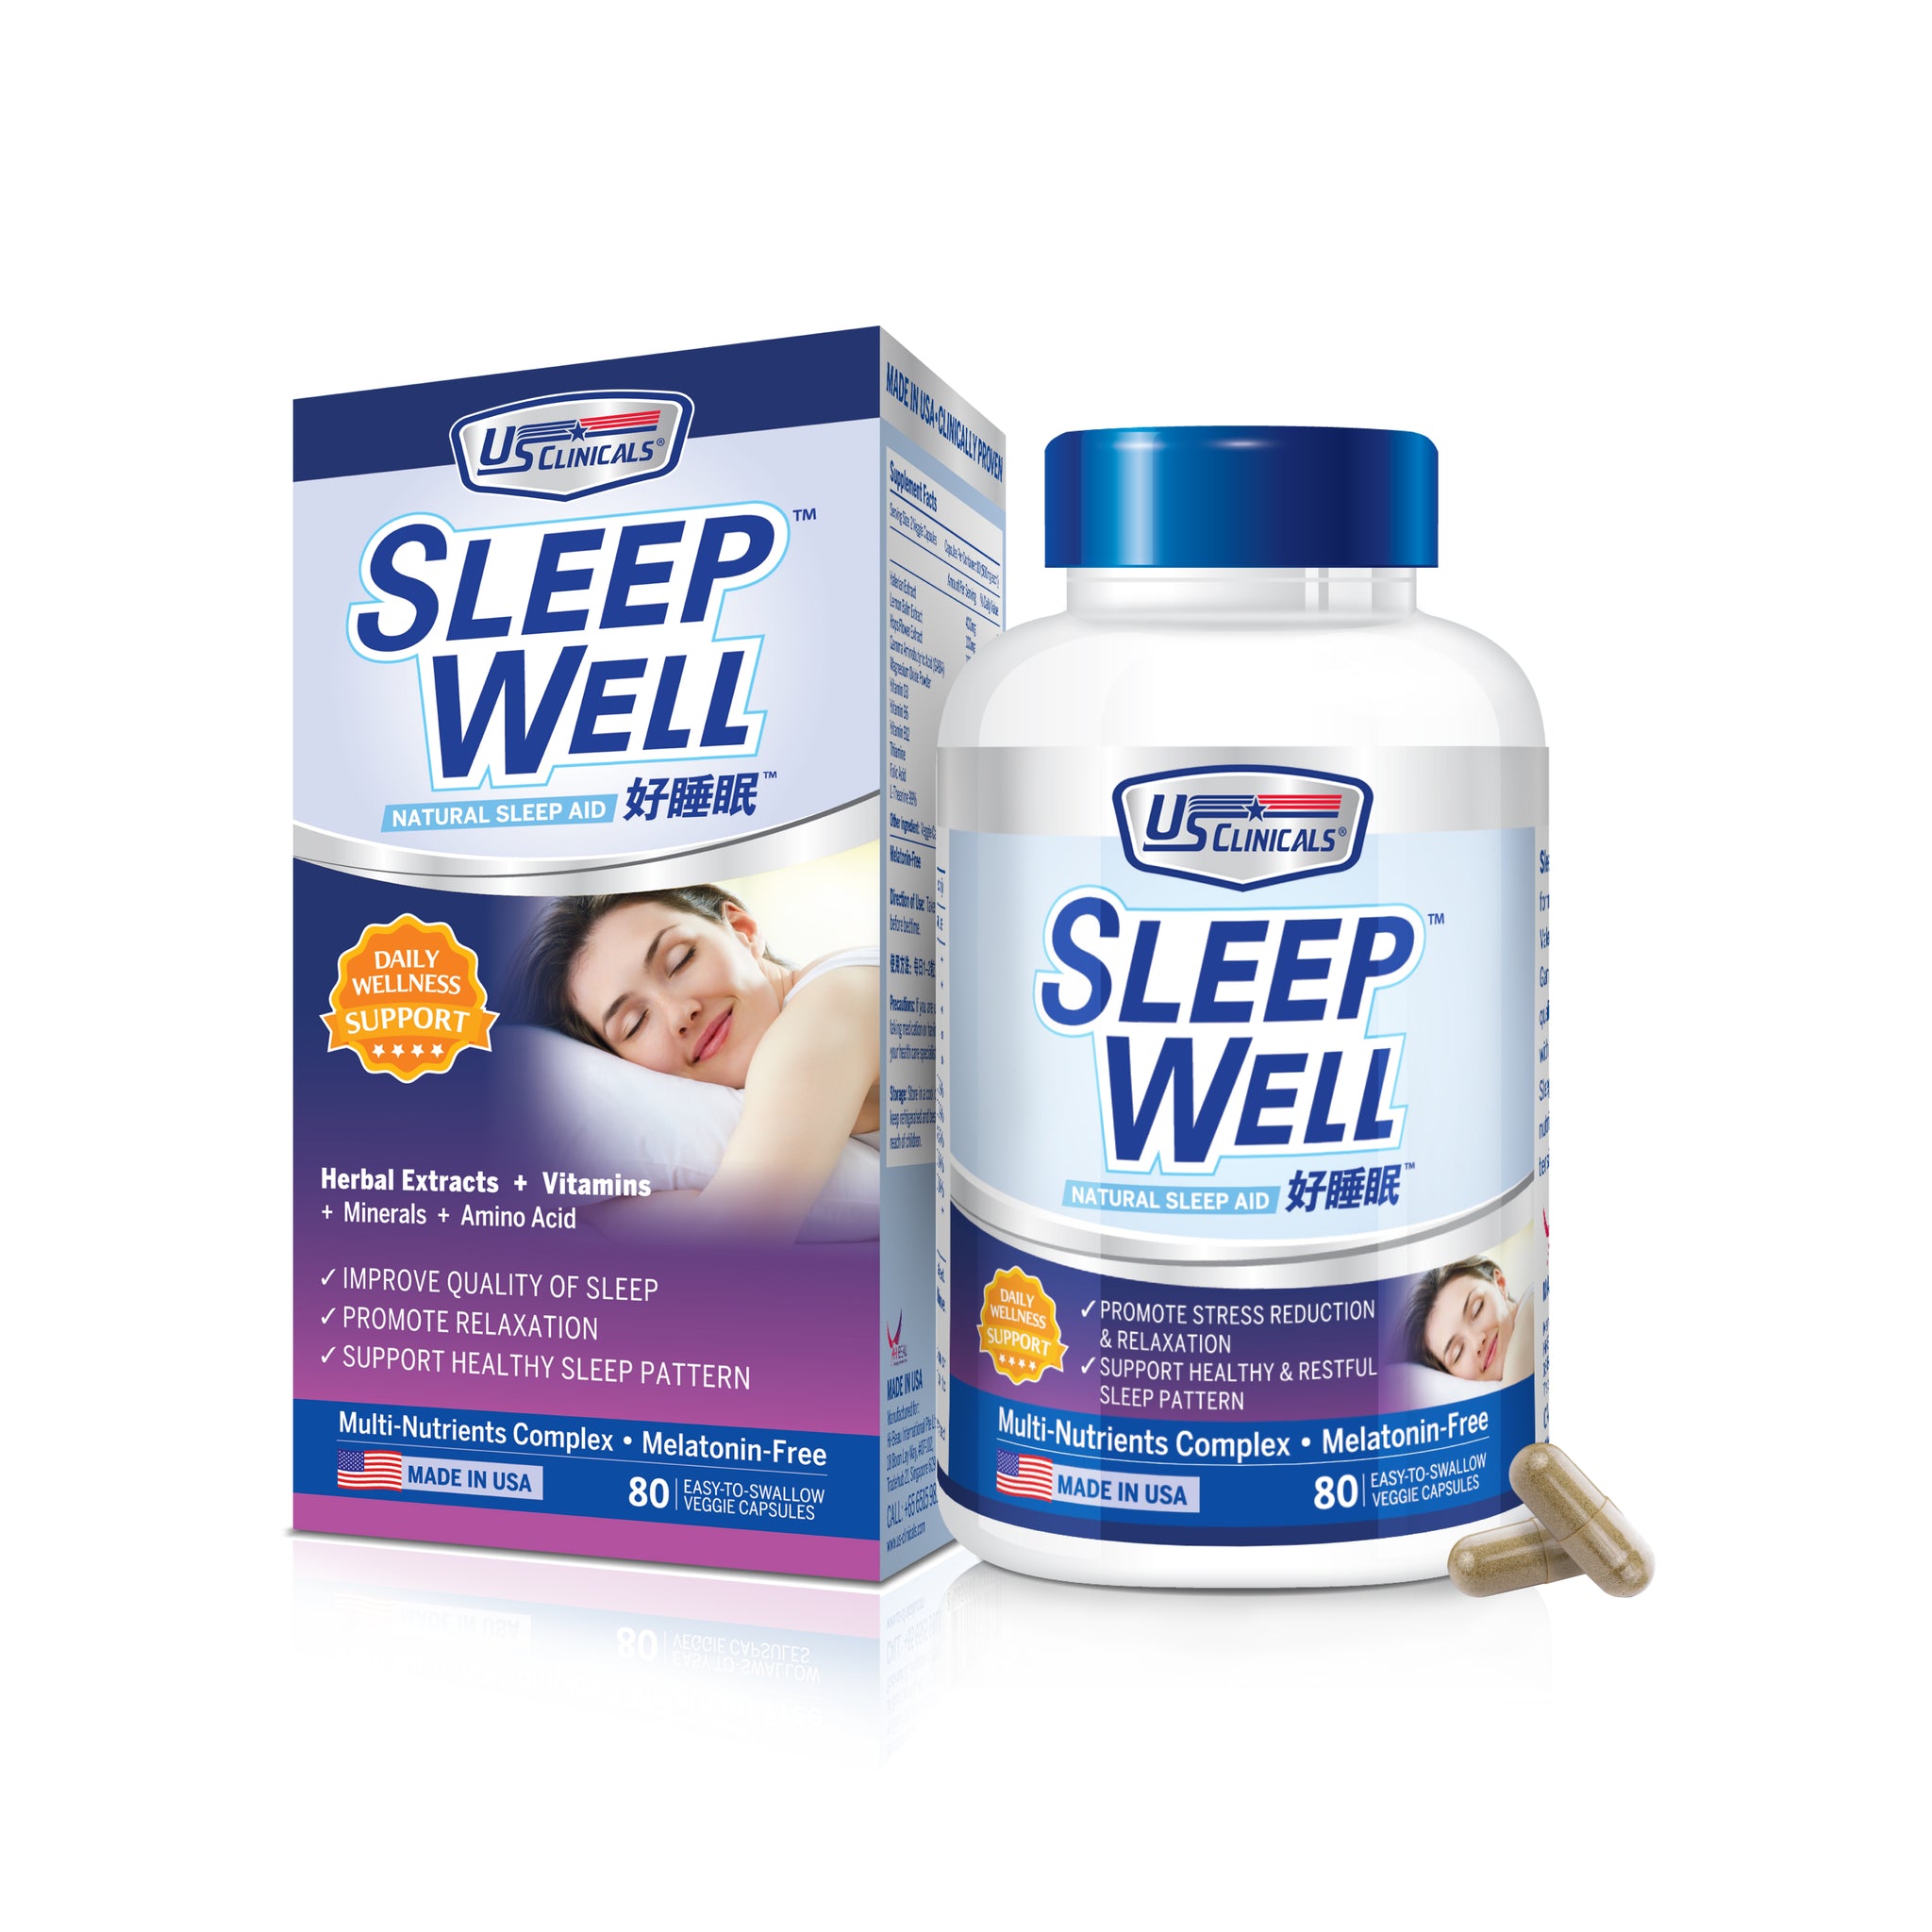 US Clinicals® SleepWell™.